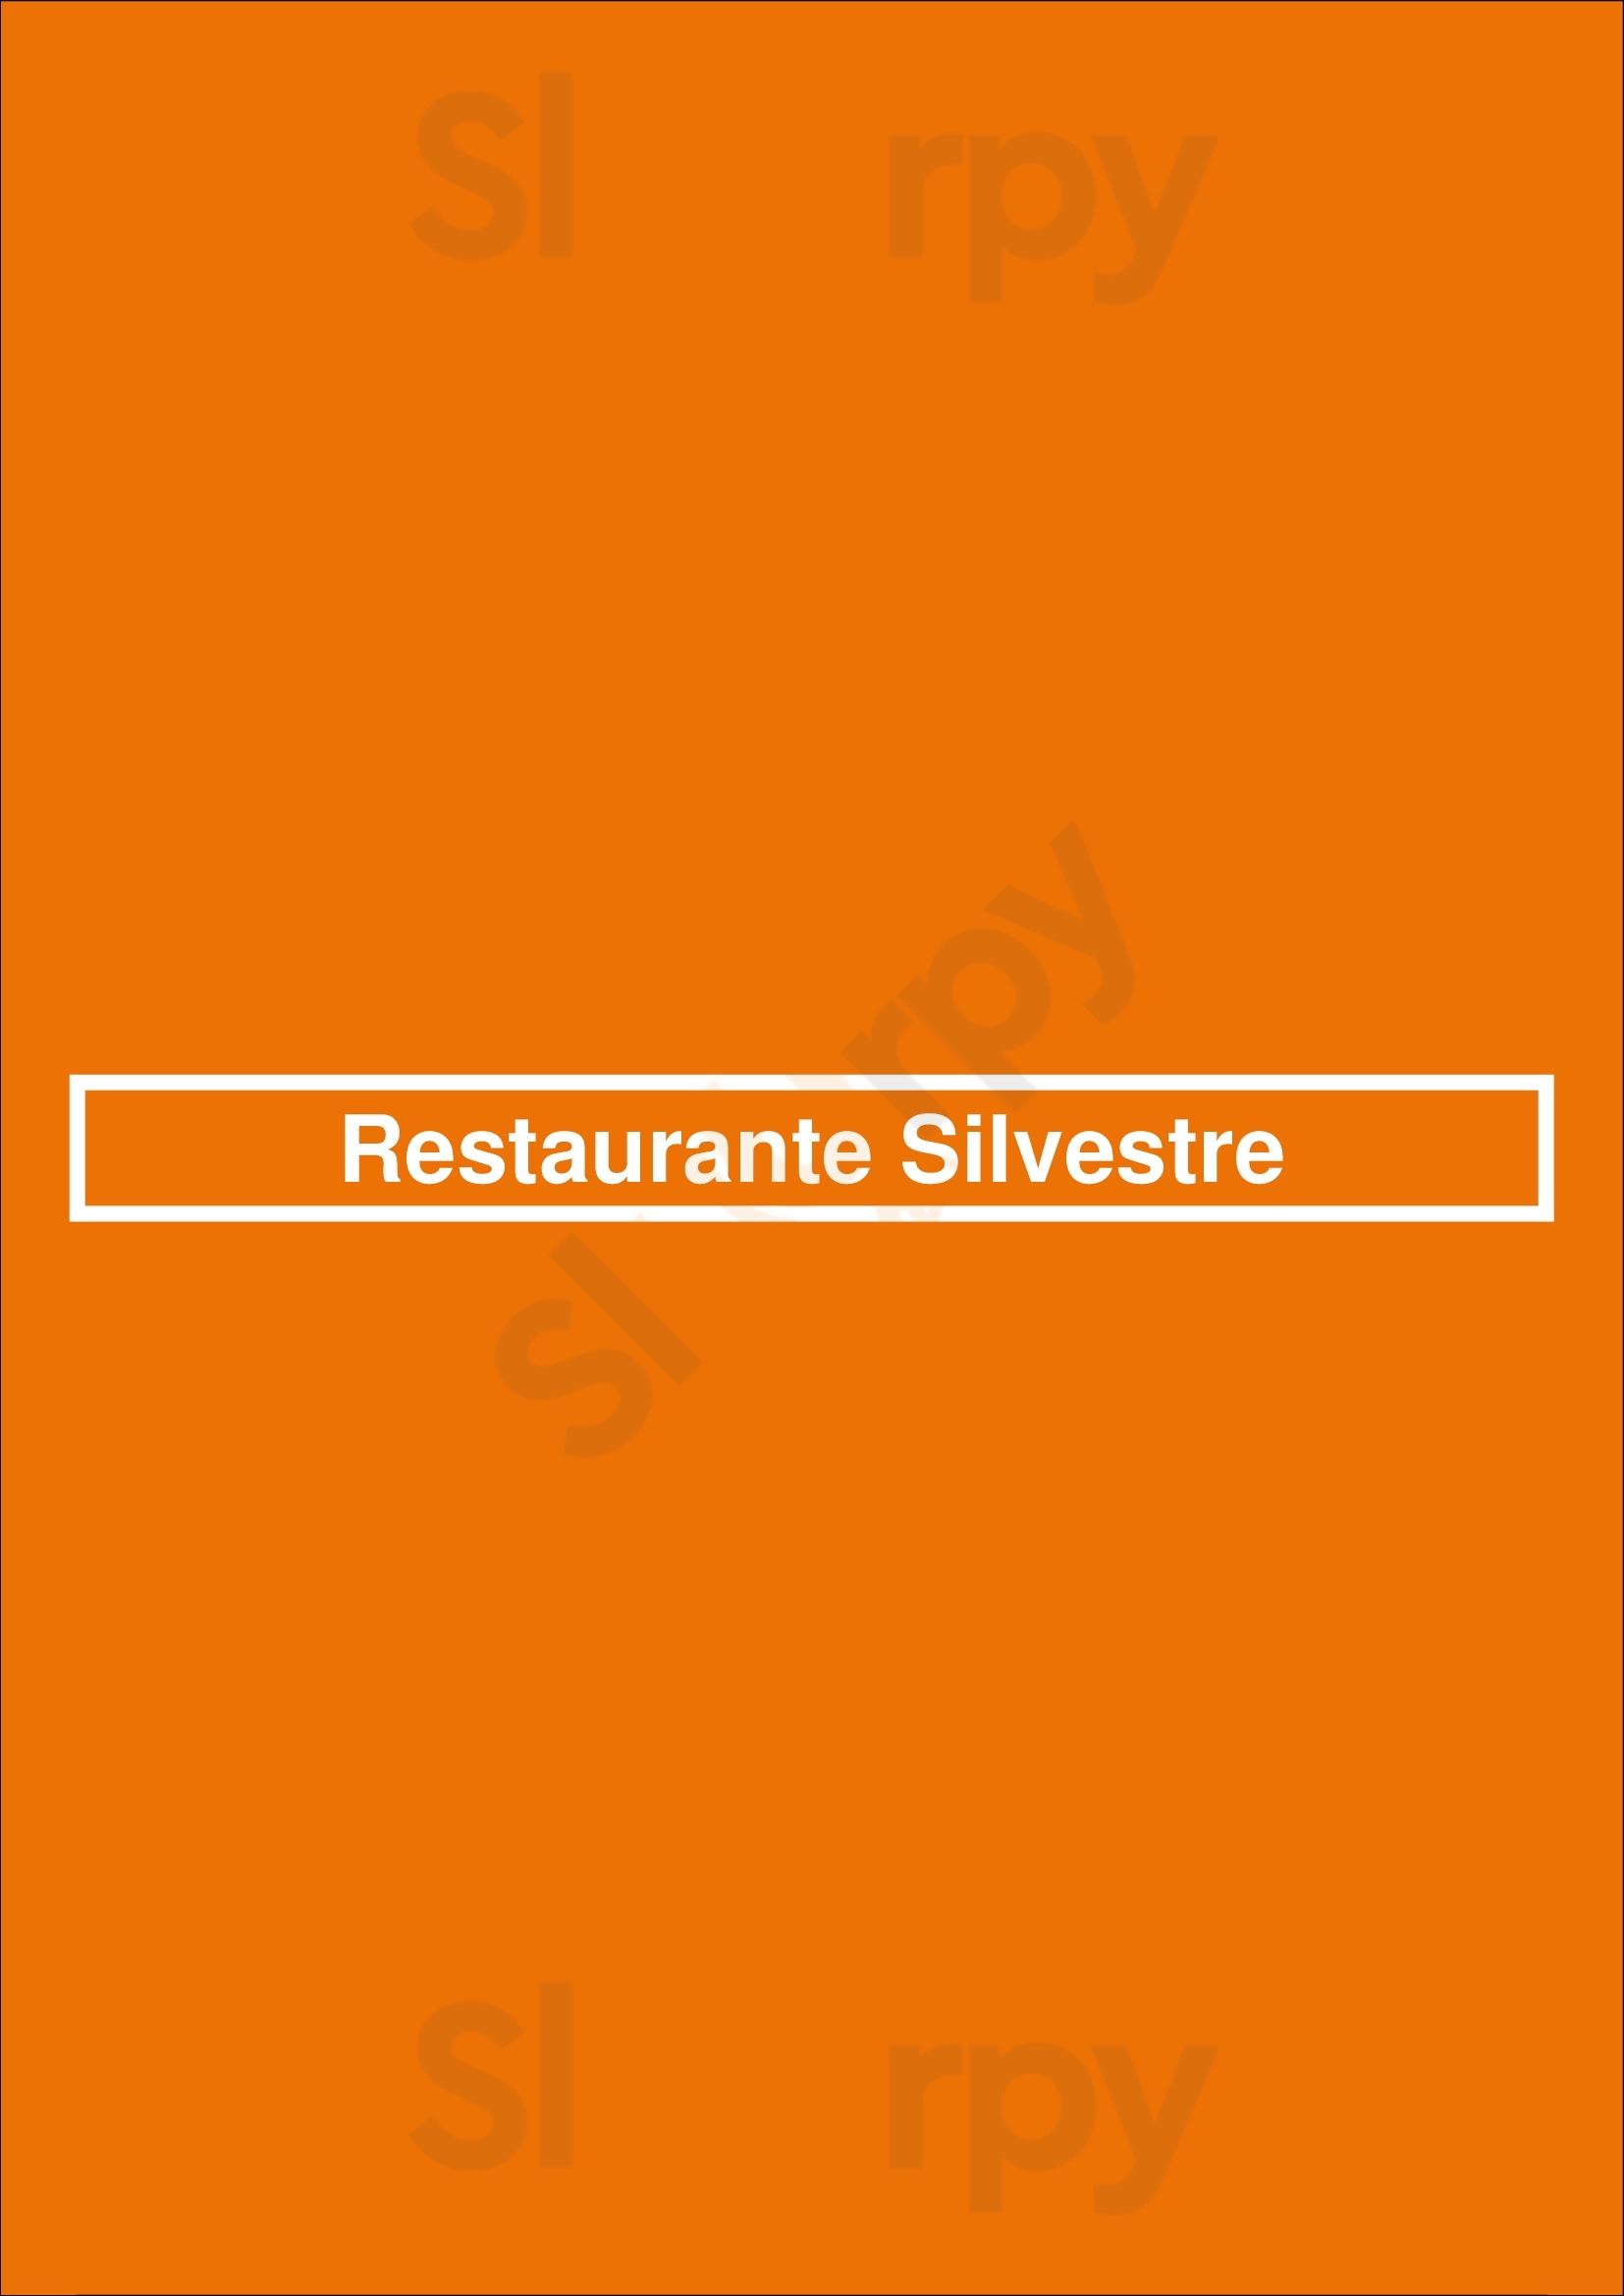 Restaurante Silvestre San José Menu - 1